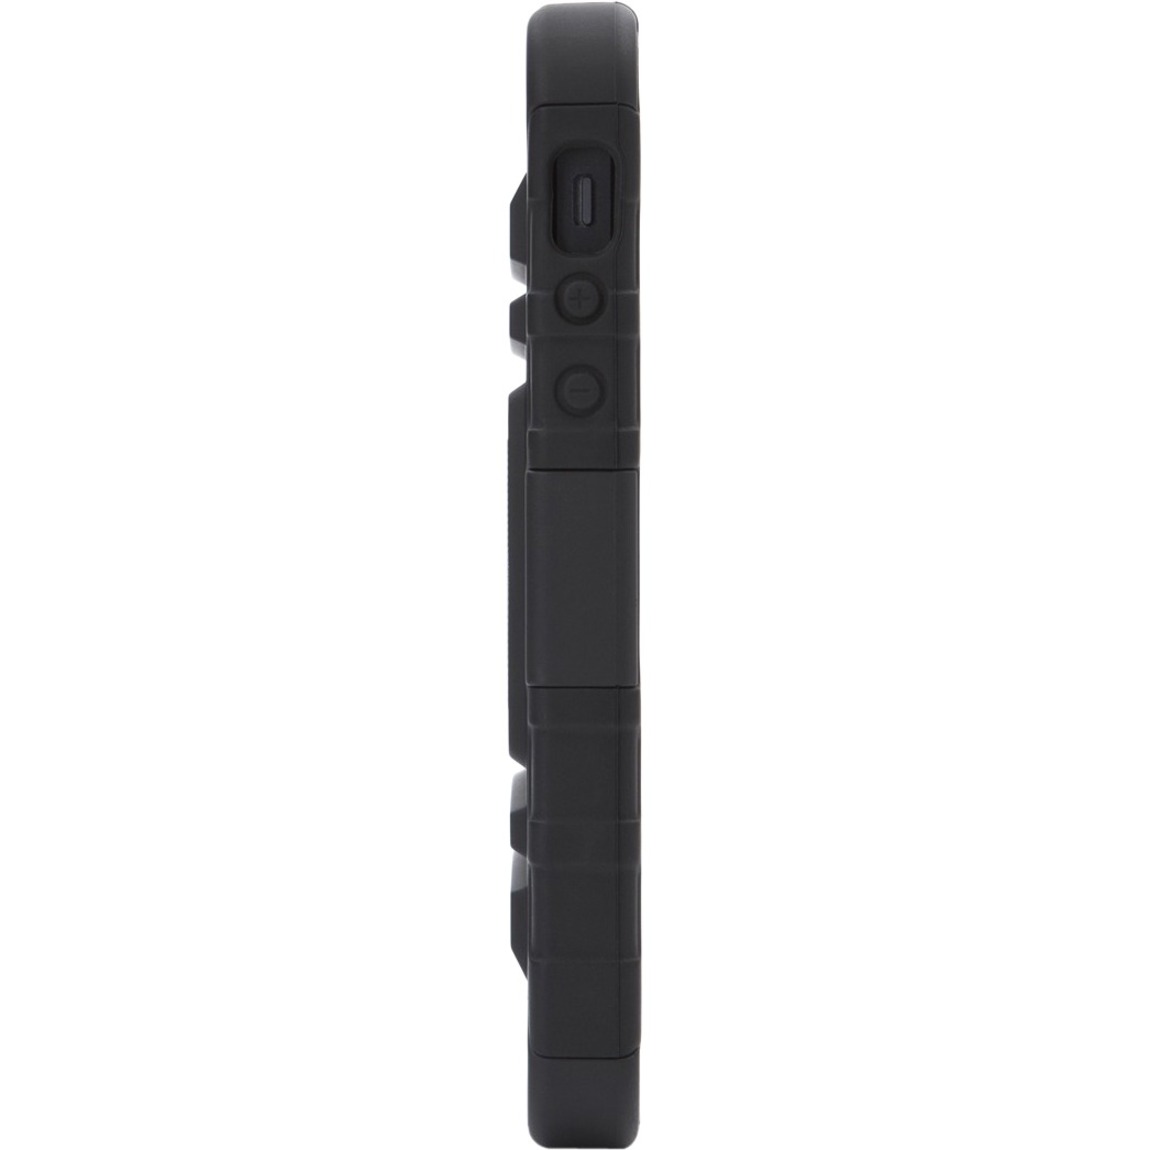 i-Blason Prime Carrying Case (Holster) Apple iPhone 5c Smartphone, Black - image 2 of 4